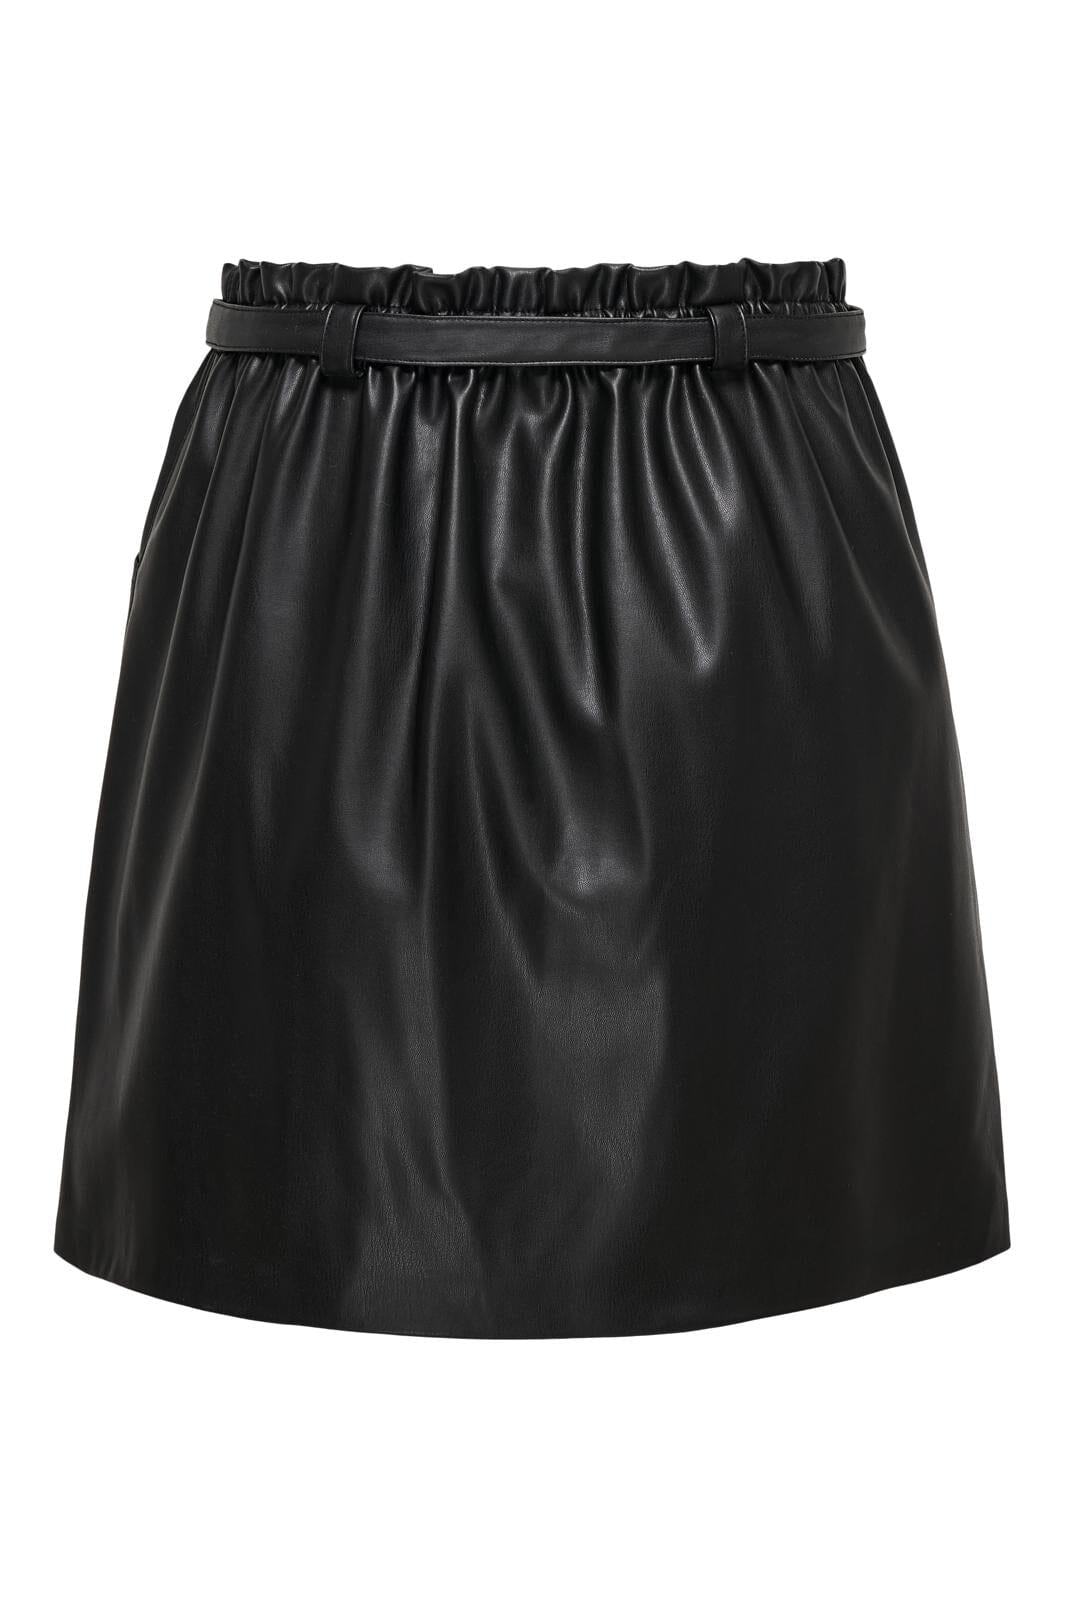 Only - Onlheidi Faux Leather Skirt Cc - 3645585 Black